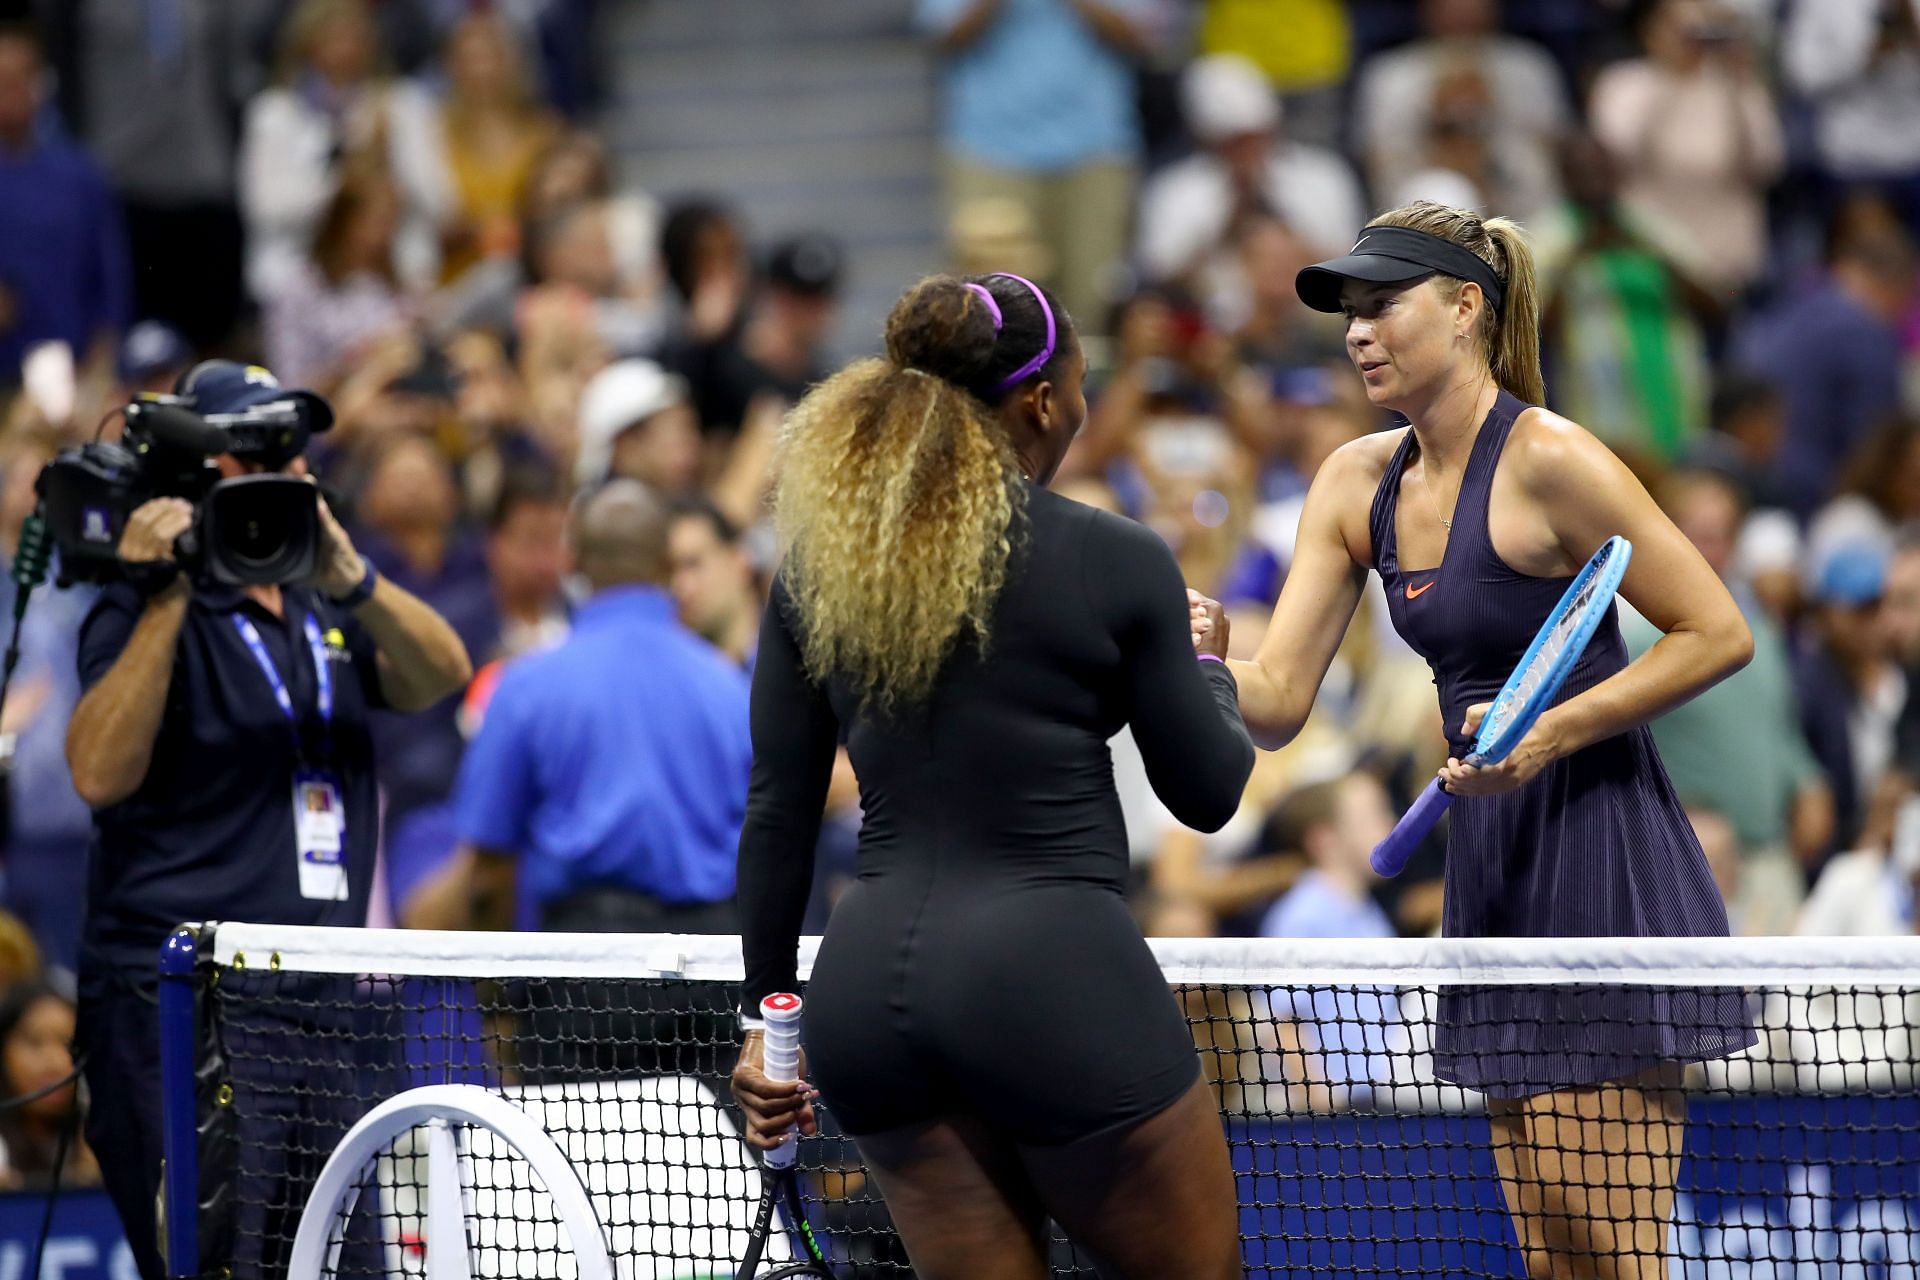 Maria Sharapova and Serena Williams at the 2019 US Open